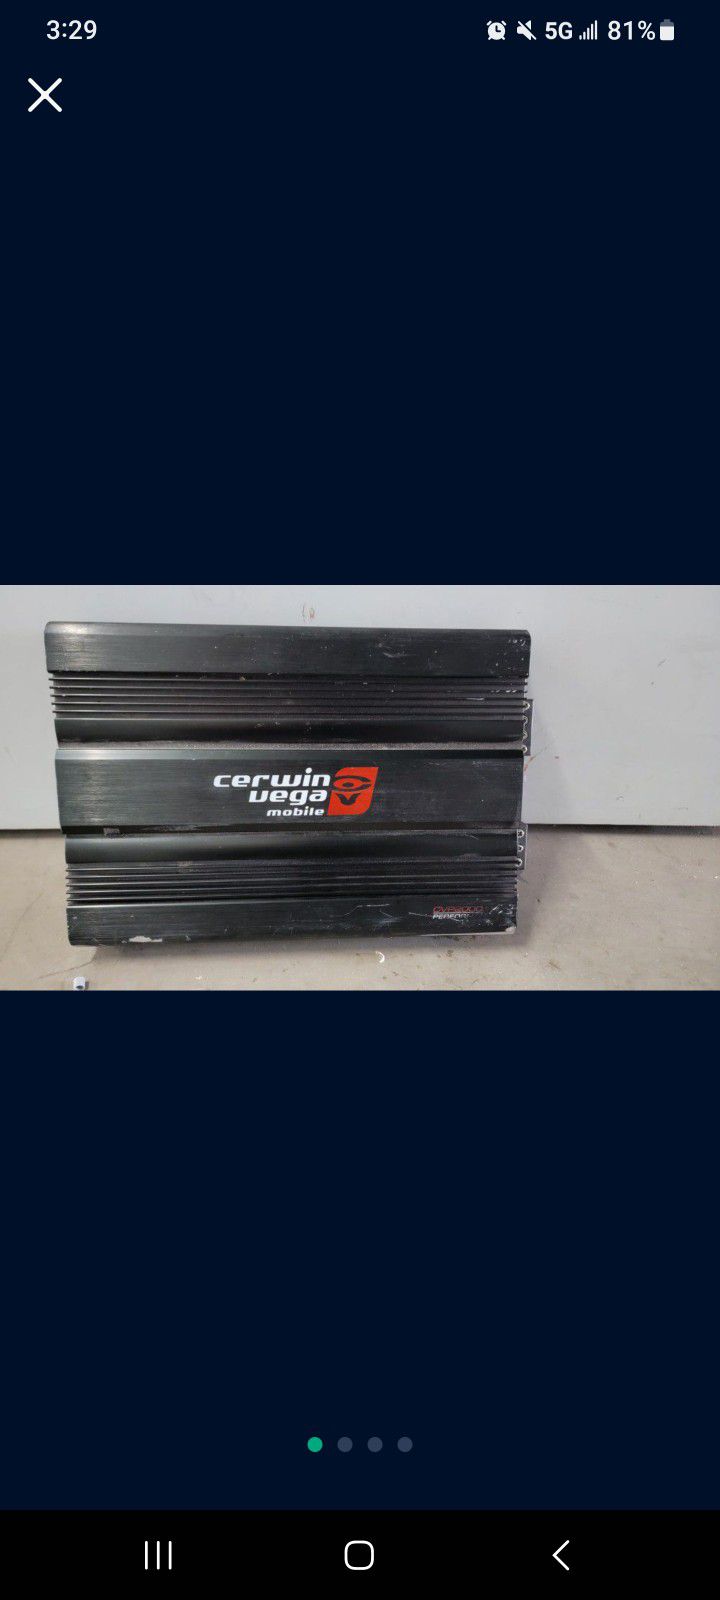 Cerwin Vega 2000W Amp